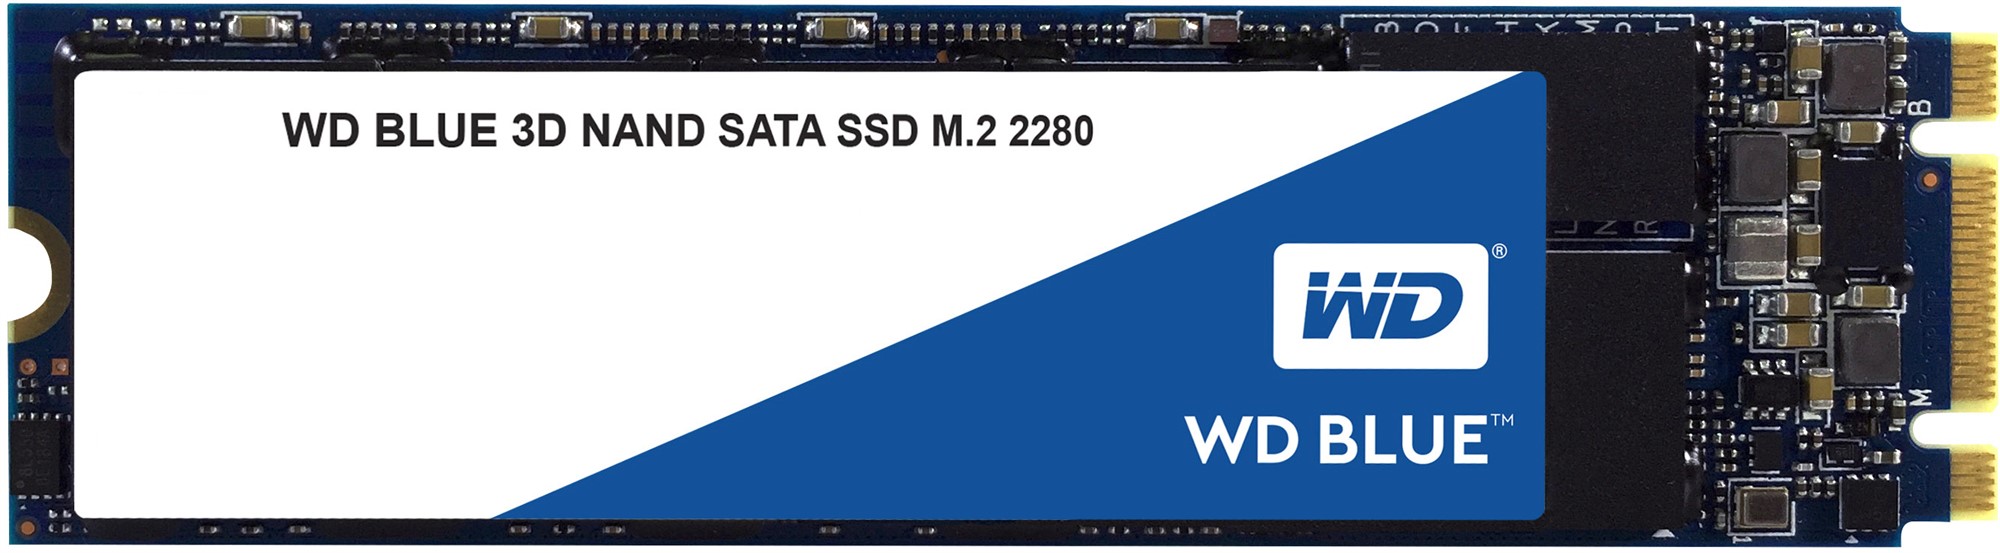 Hard Disk SSD Western Digital Blue 3D NAND 500GB M.2 2280 title=Hard Disk SSD Western Digital Blue 3D NAND 500GB M.2 2280